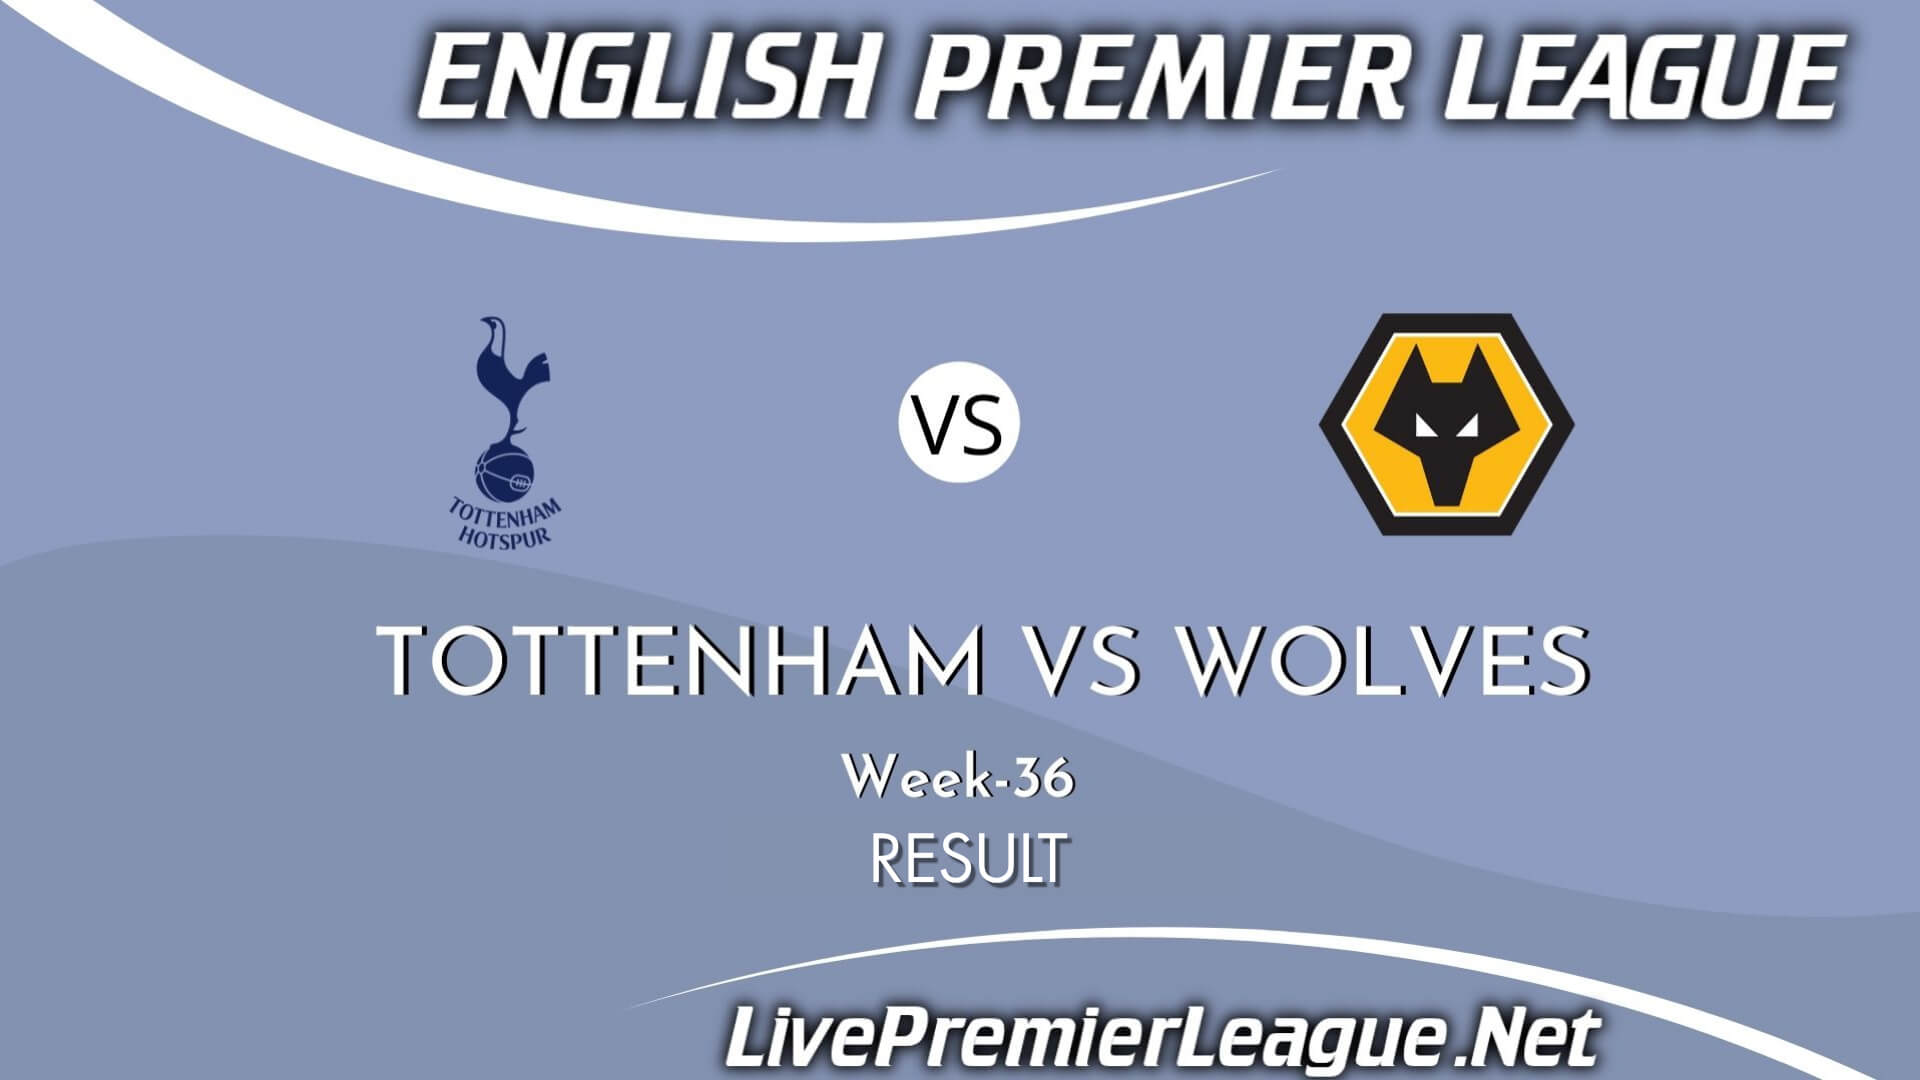 Tottenham Hotspur Vs Wolves Result 2021 | EPL Week 36